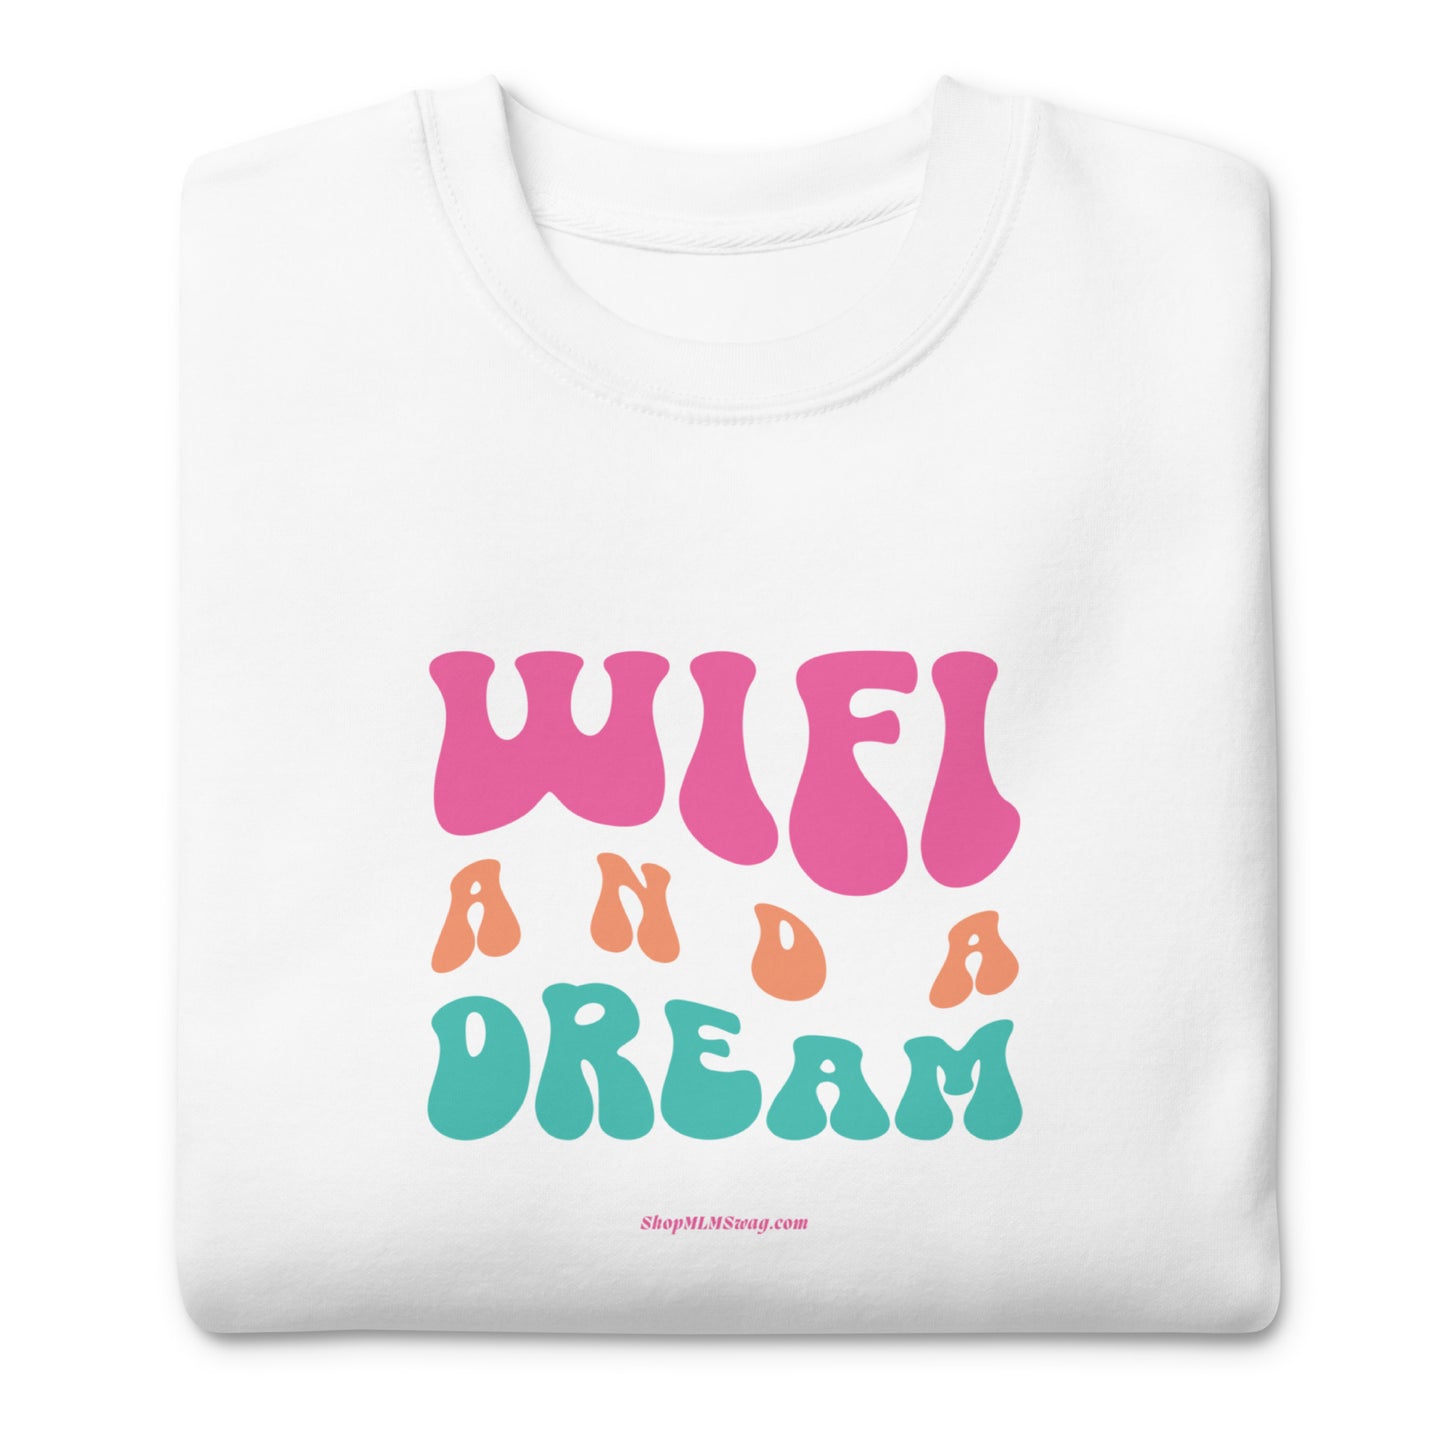 WiFi and a Dream — Beach Vibes Sweatshirt